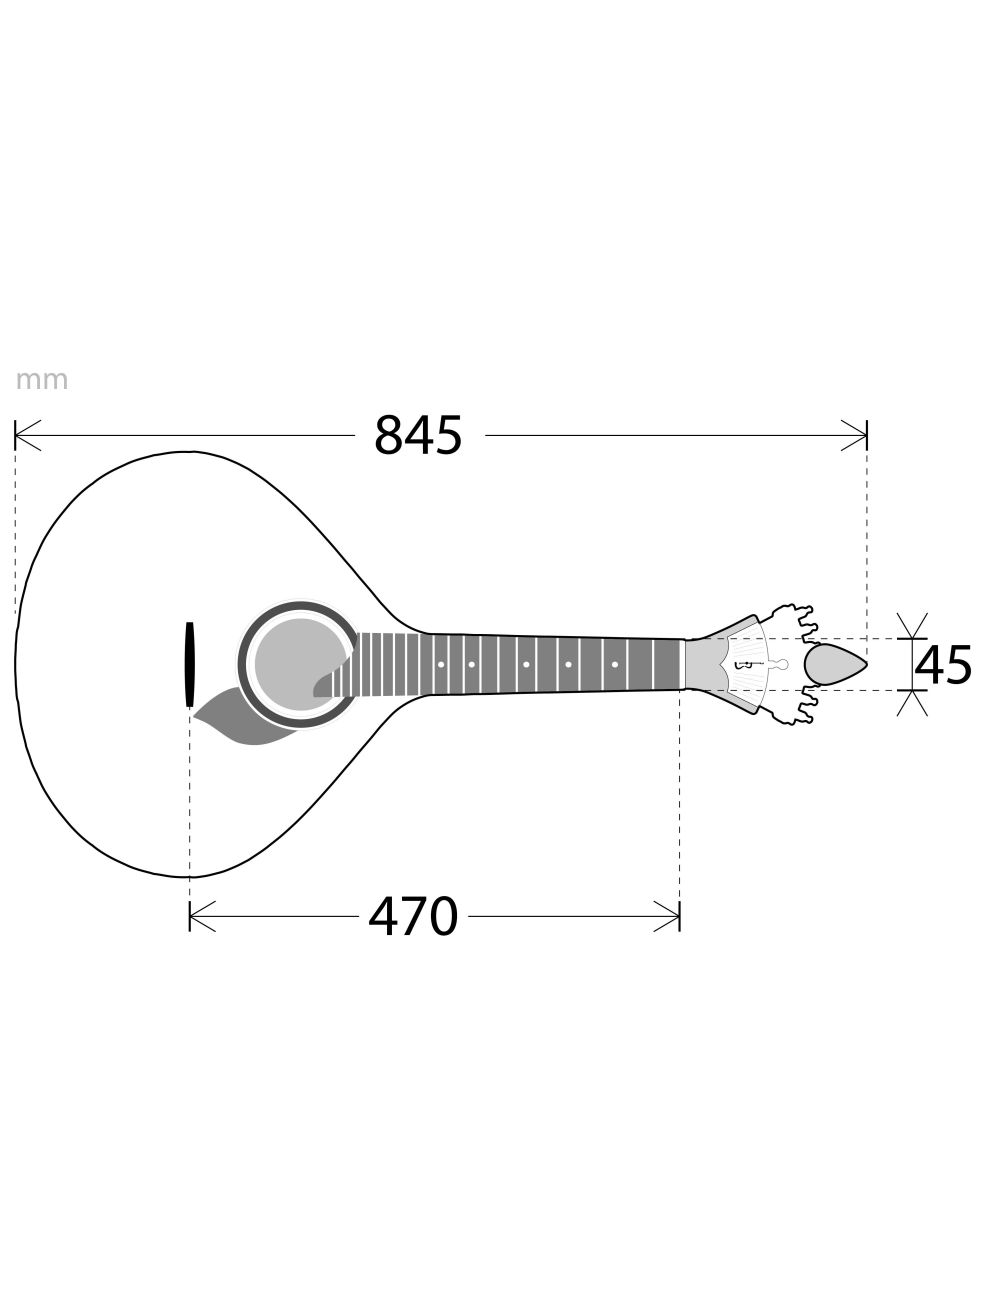 APC 305-LS guitare portugaise